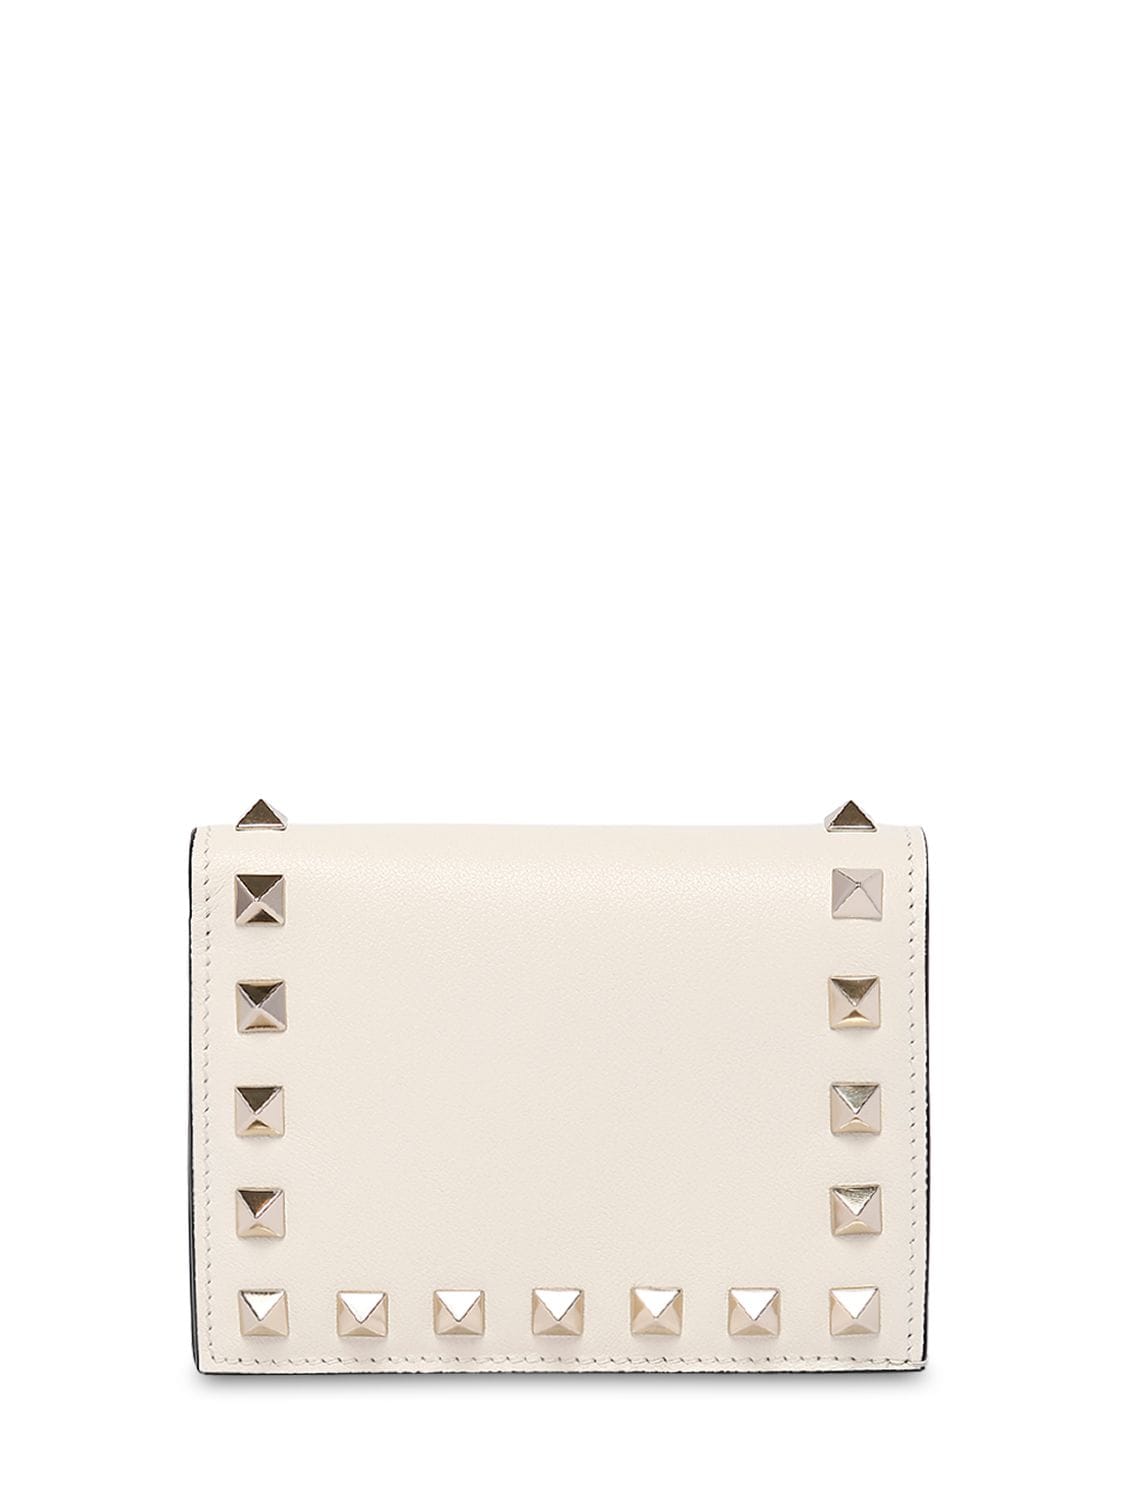 Valentino Garavani Rockstud Leather Compact Wallet In Light Ivory